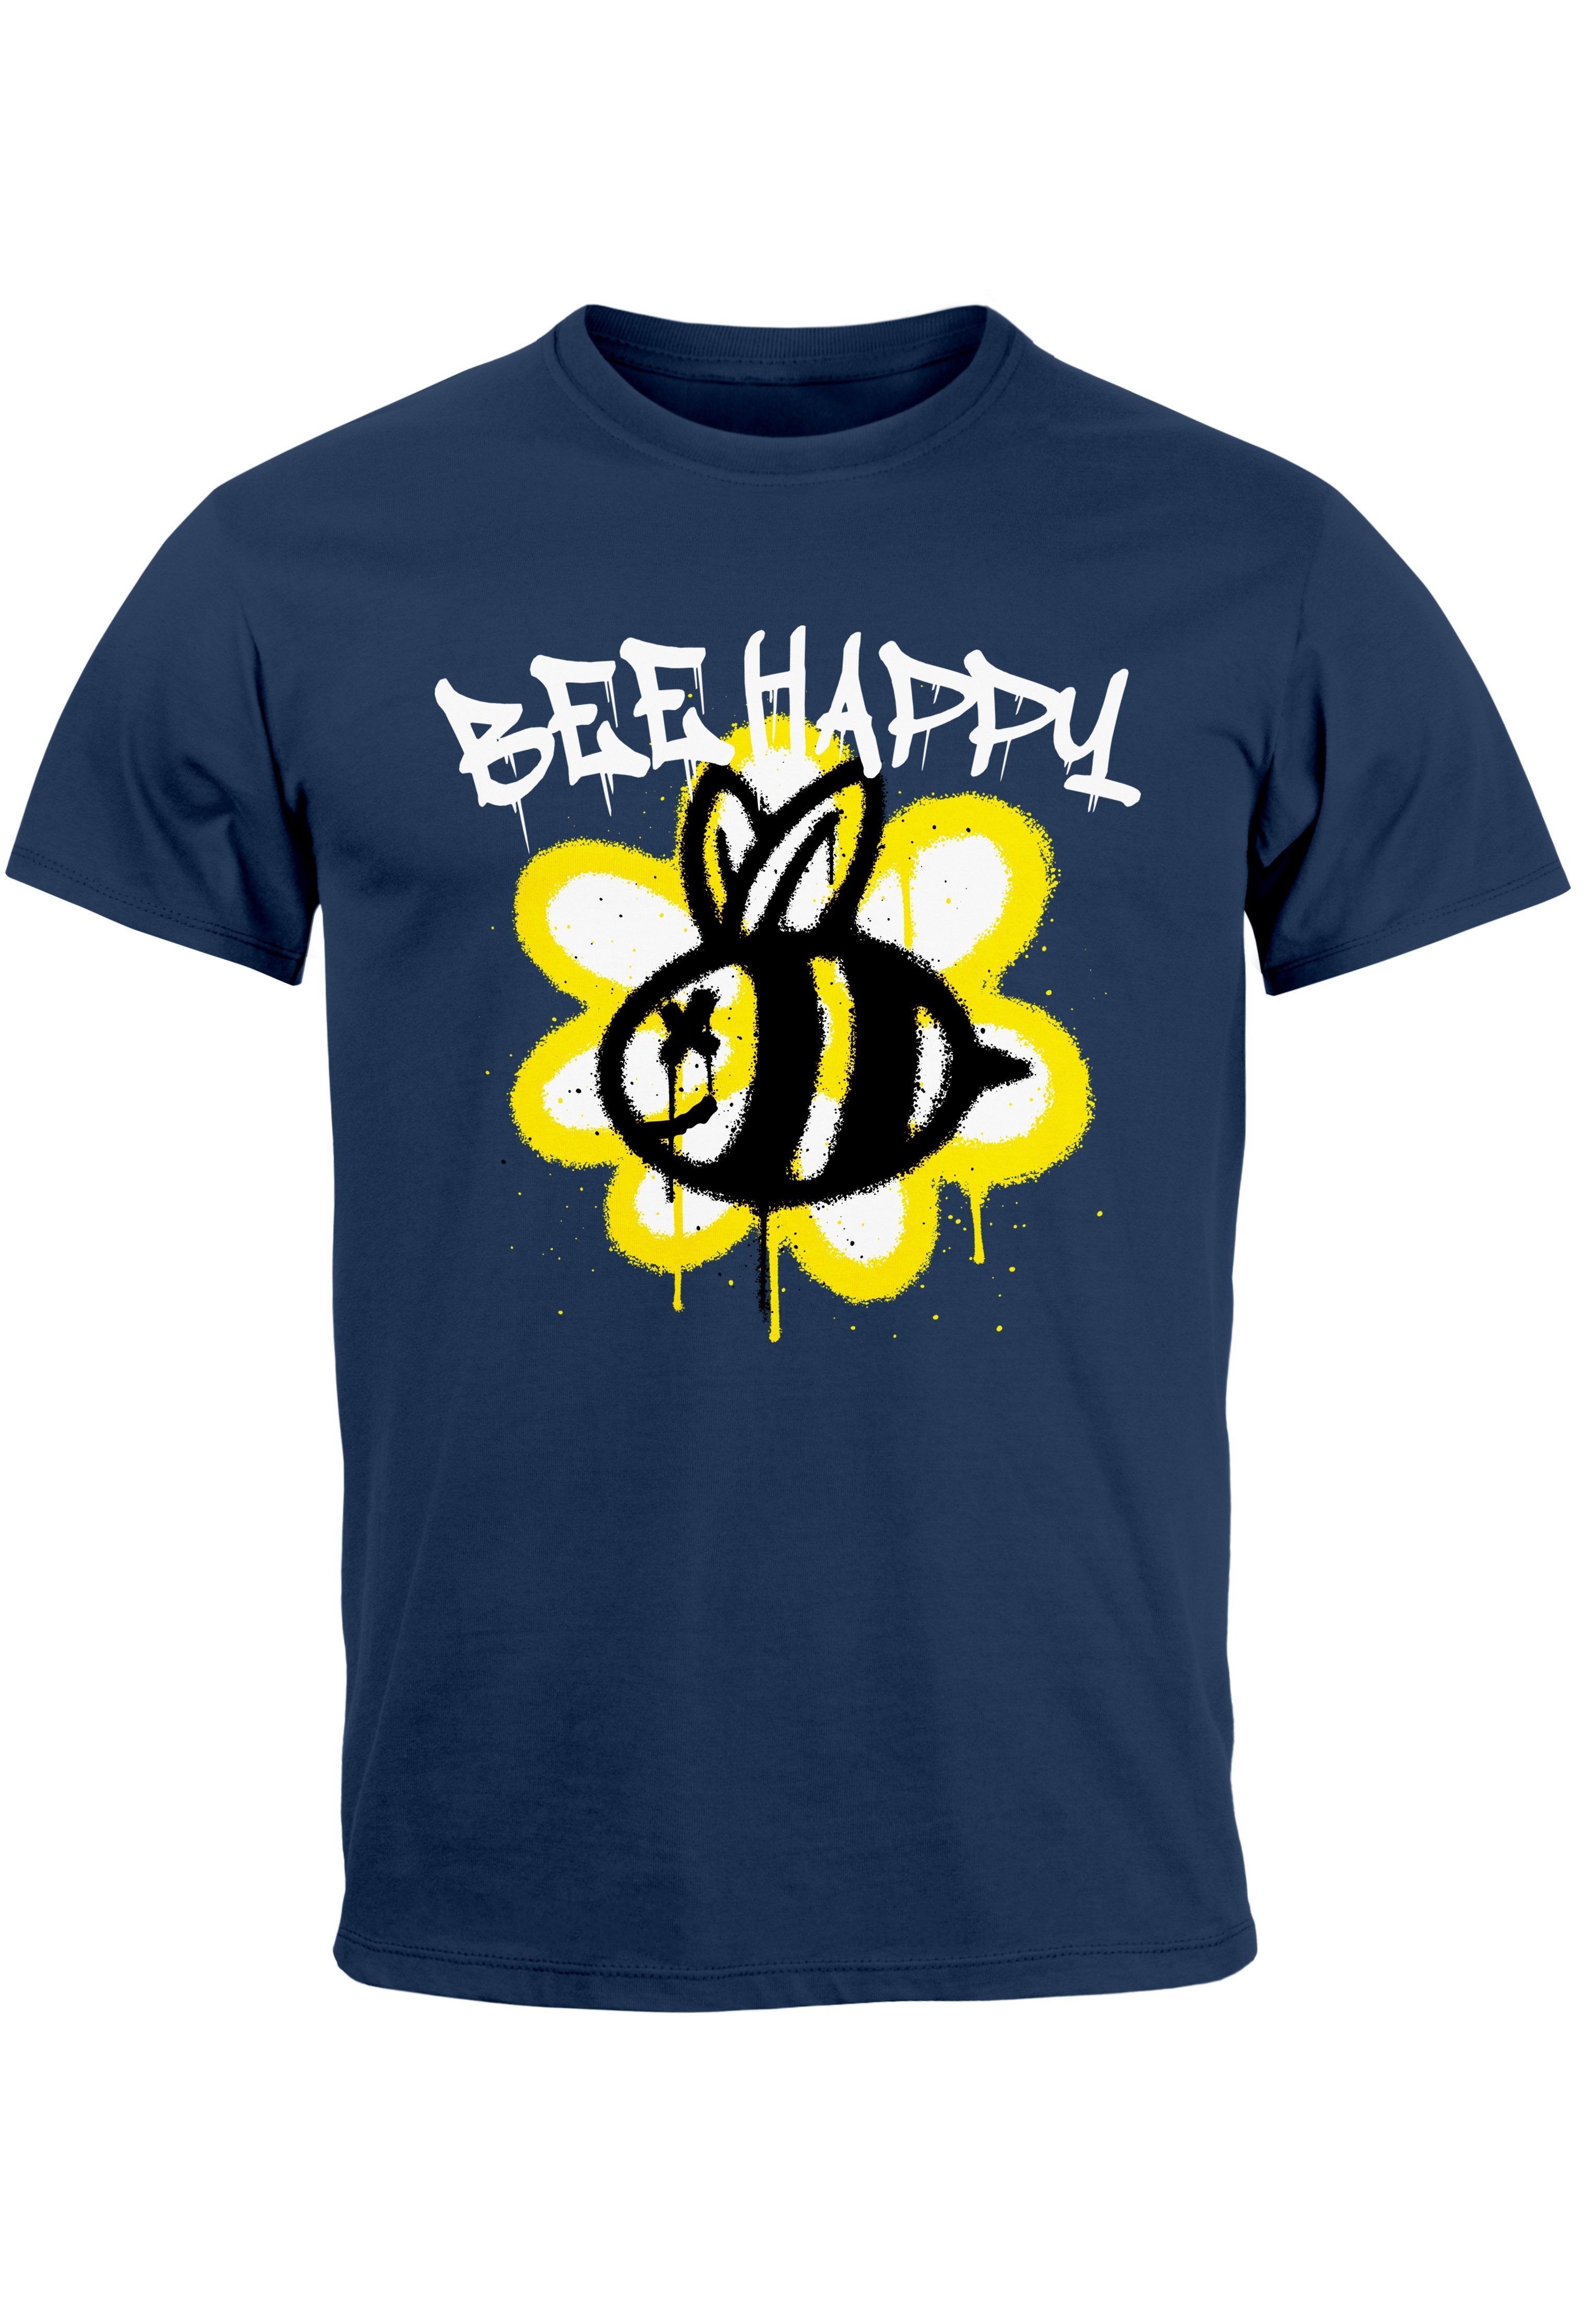 Neverless Print-Shirt Herren T-Shirt Aufdruck Bee Happy Biene Blume Graffiti SchriftzugFashi mit Print navy